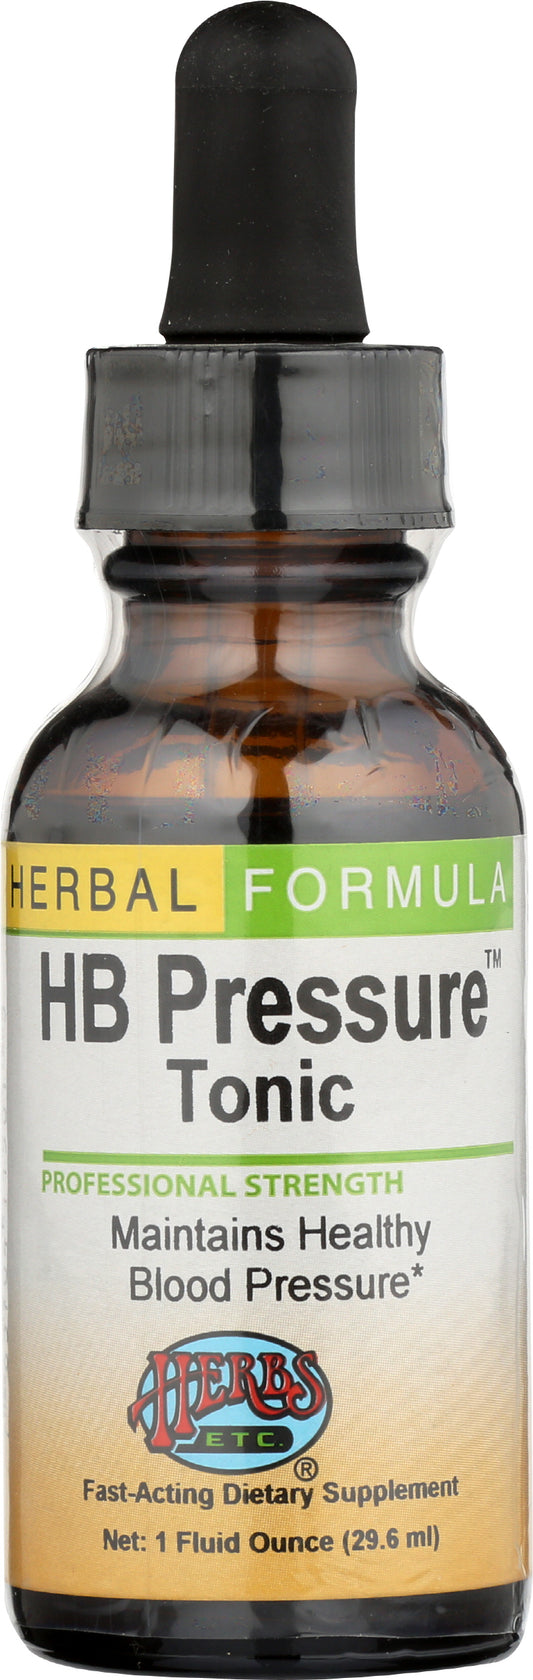 Herbs Etc. HB Pressure Tonic 1 Fl. Oz. Front